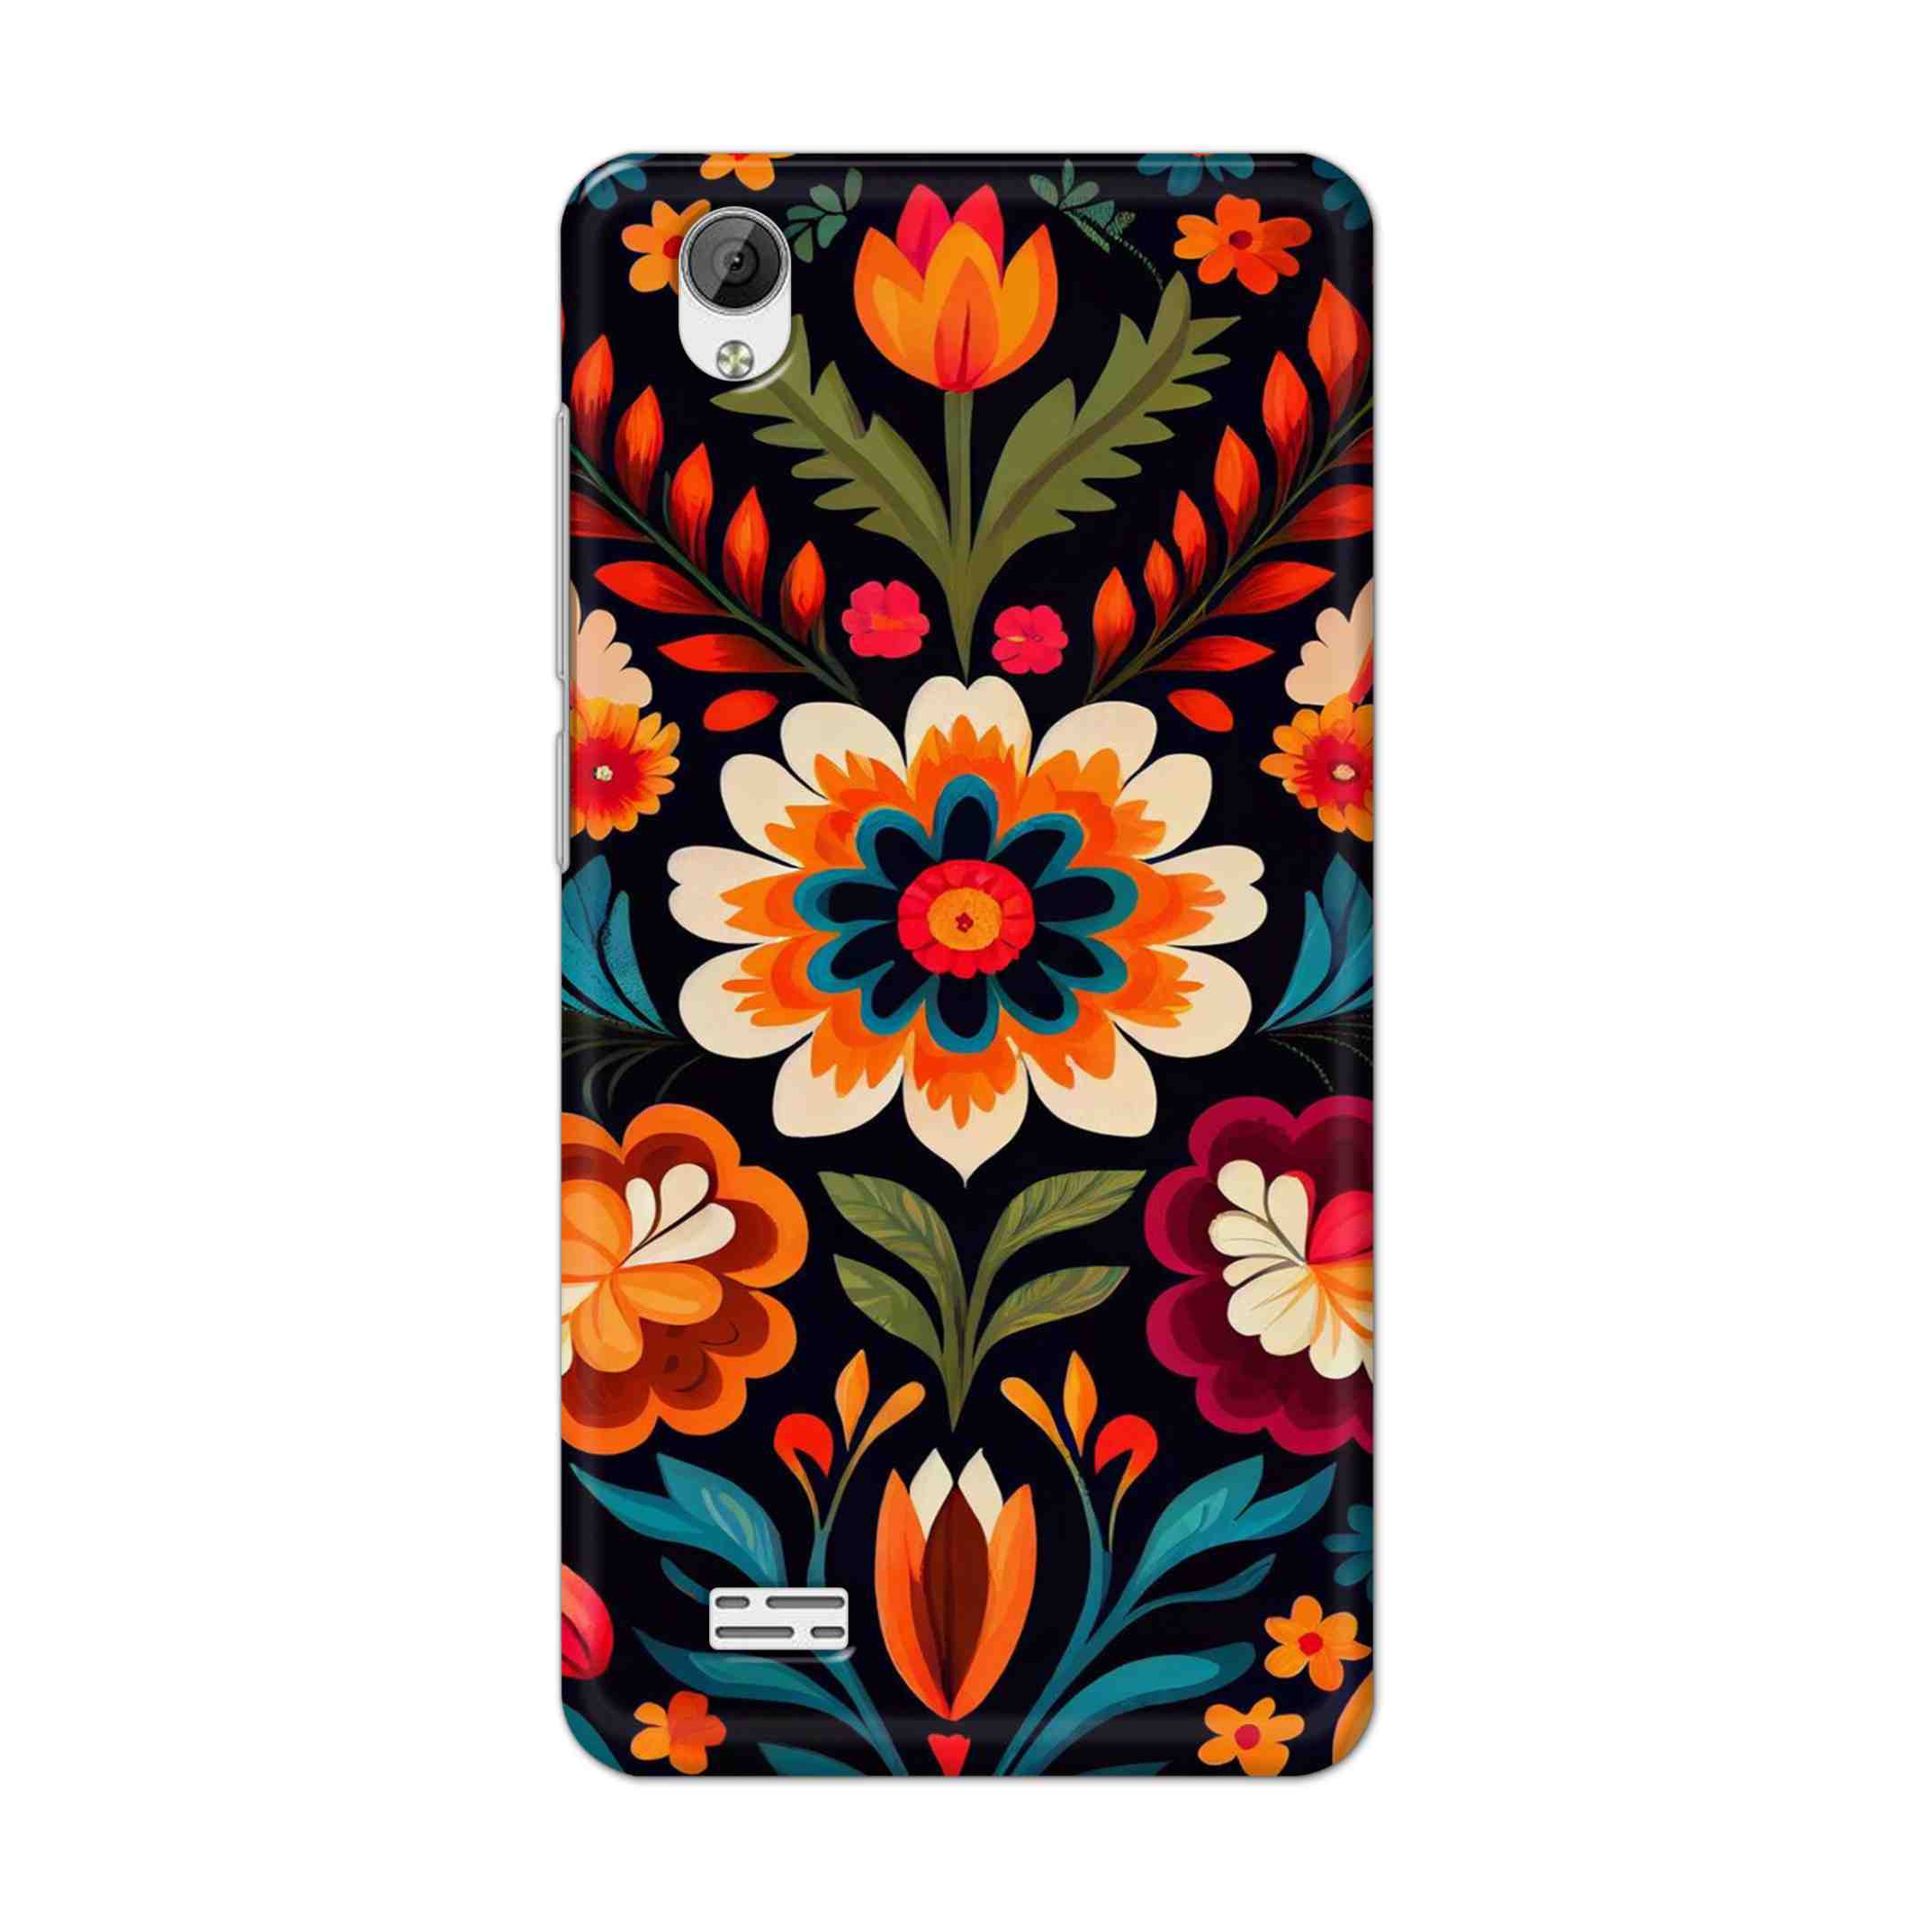 Buy Flower Hard Back Mobile Phone Case Cover For Vivo Y31 Online